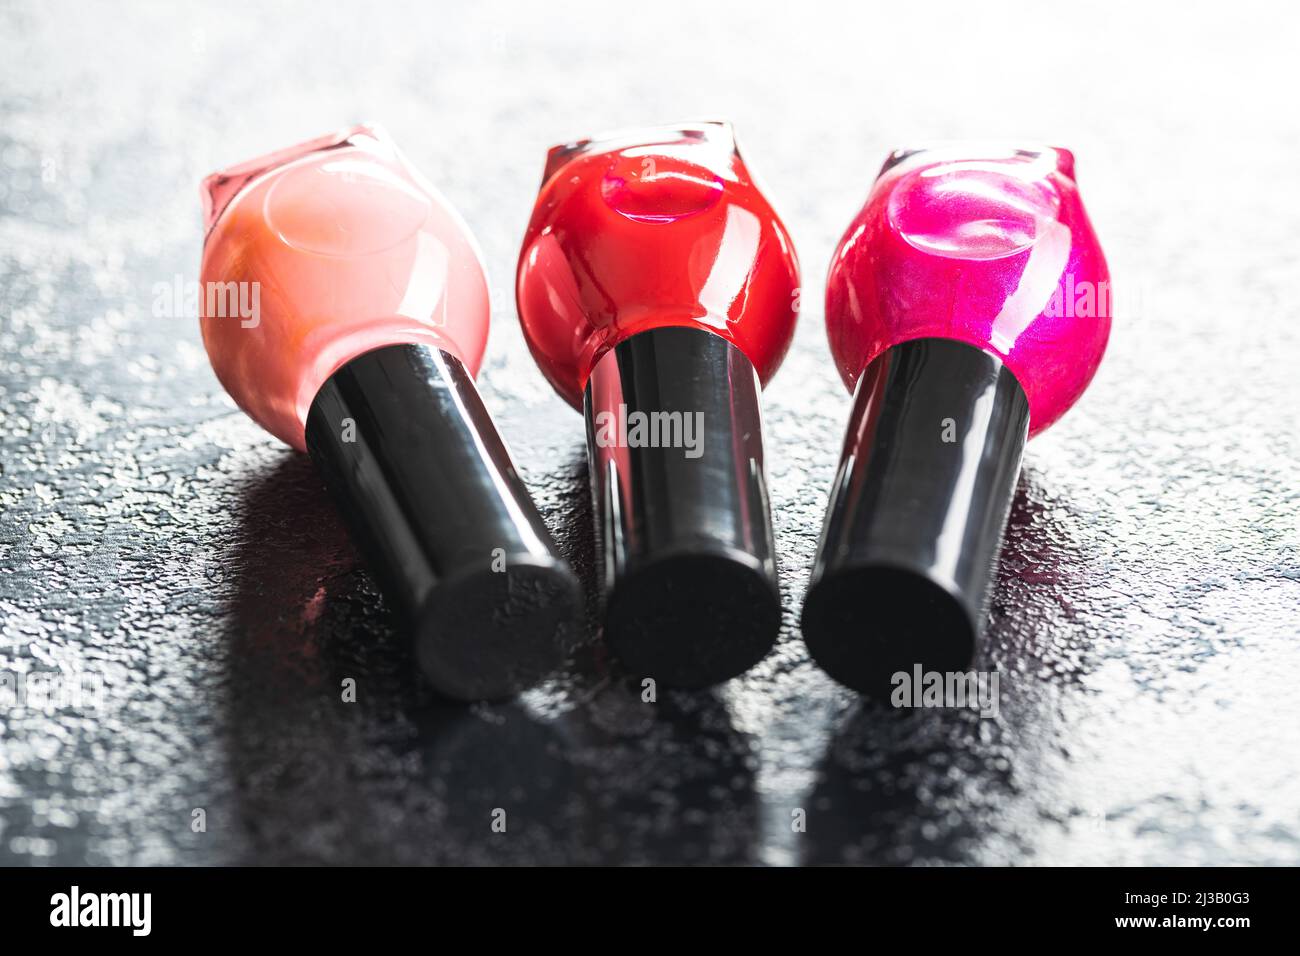 Colorful nail polish bottles on a black table. Stock Photo